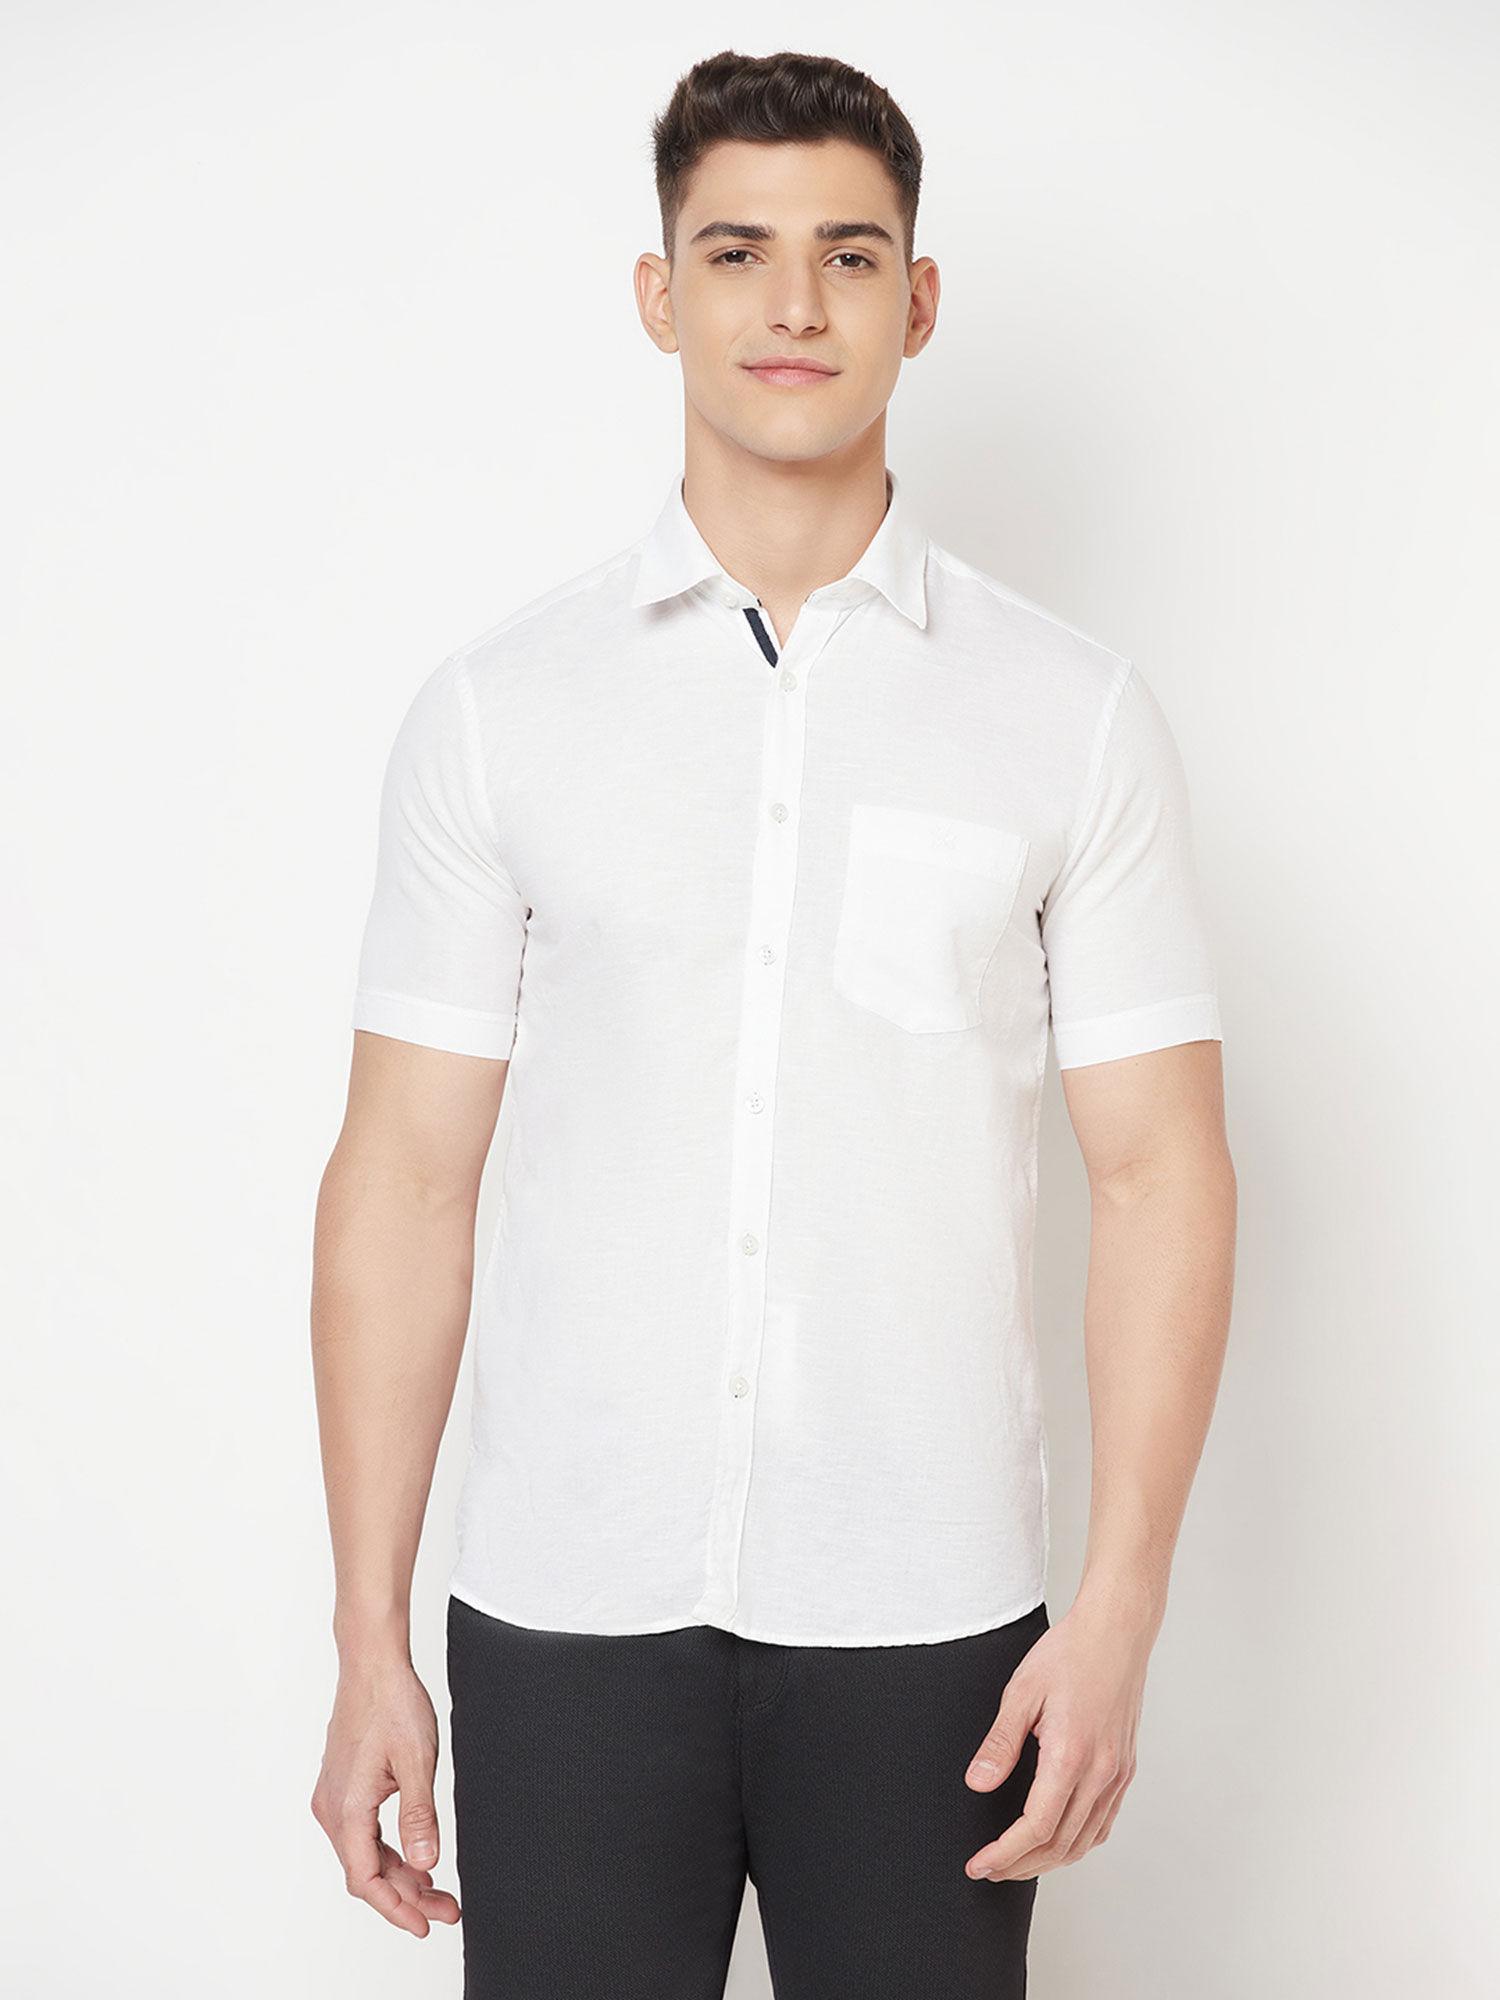 mens-white-solid-linen-shirt